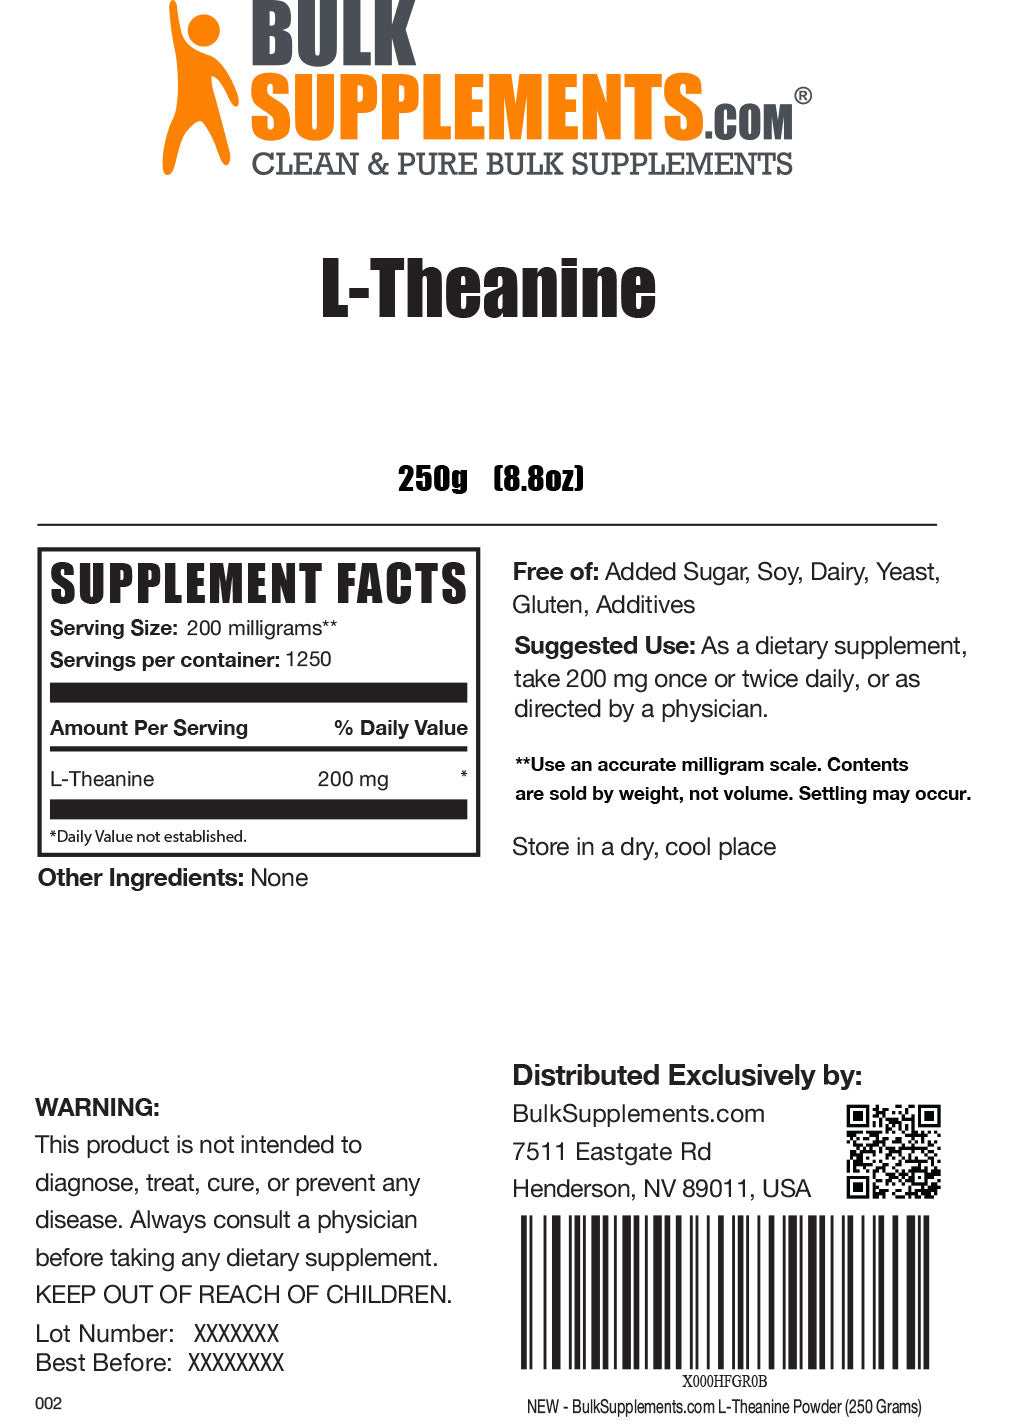 L-Theanine powder label 250g